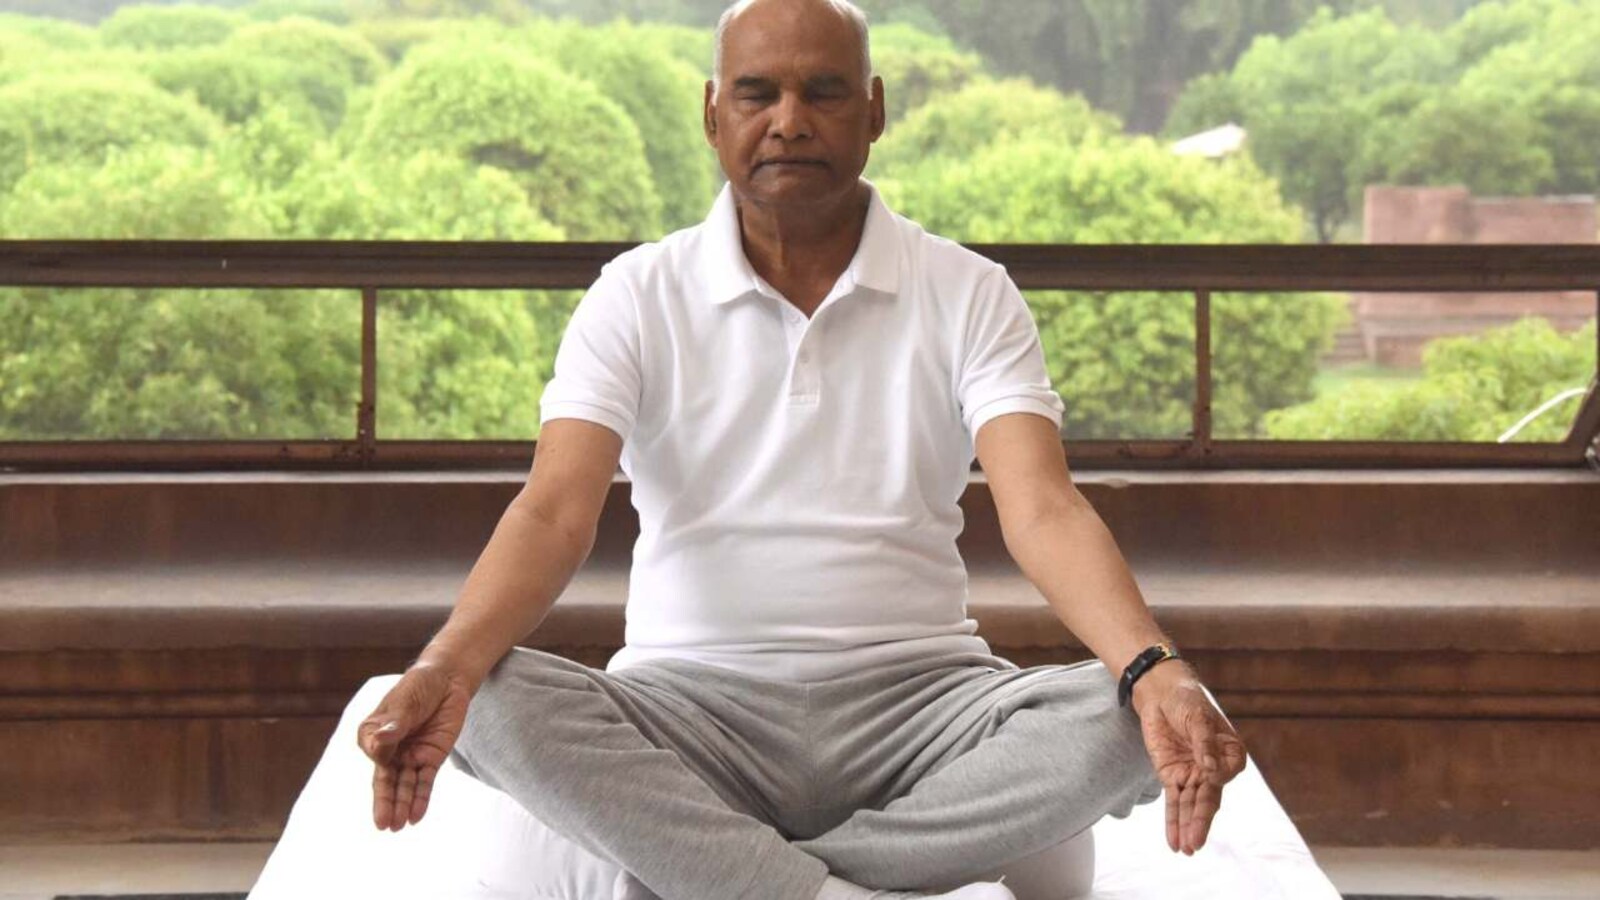 International Yoga Day: Amid Covid, Yoga can help keep body fit, mind  serene, says President Kovind - India Today